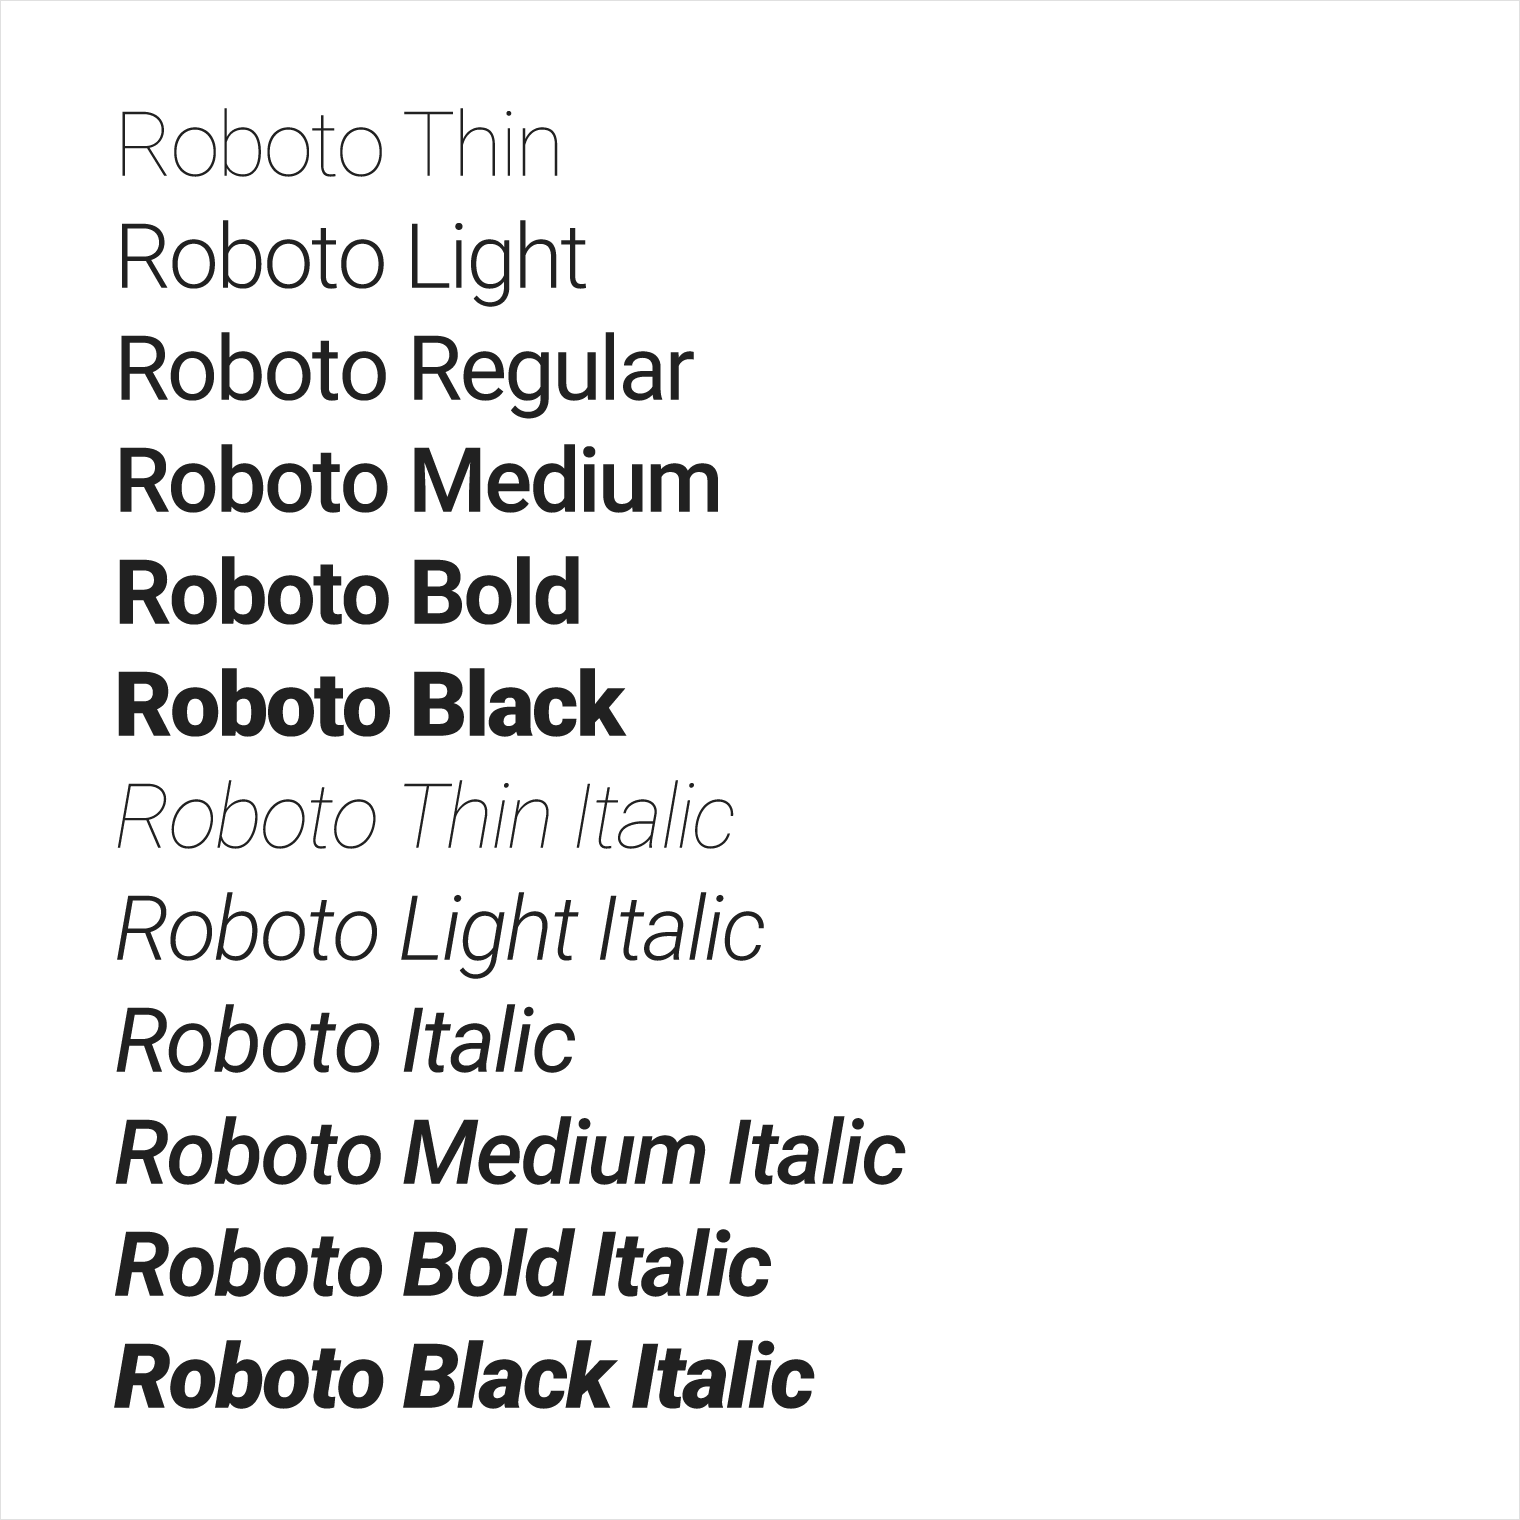  Roboto font weights, noborder